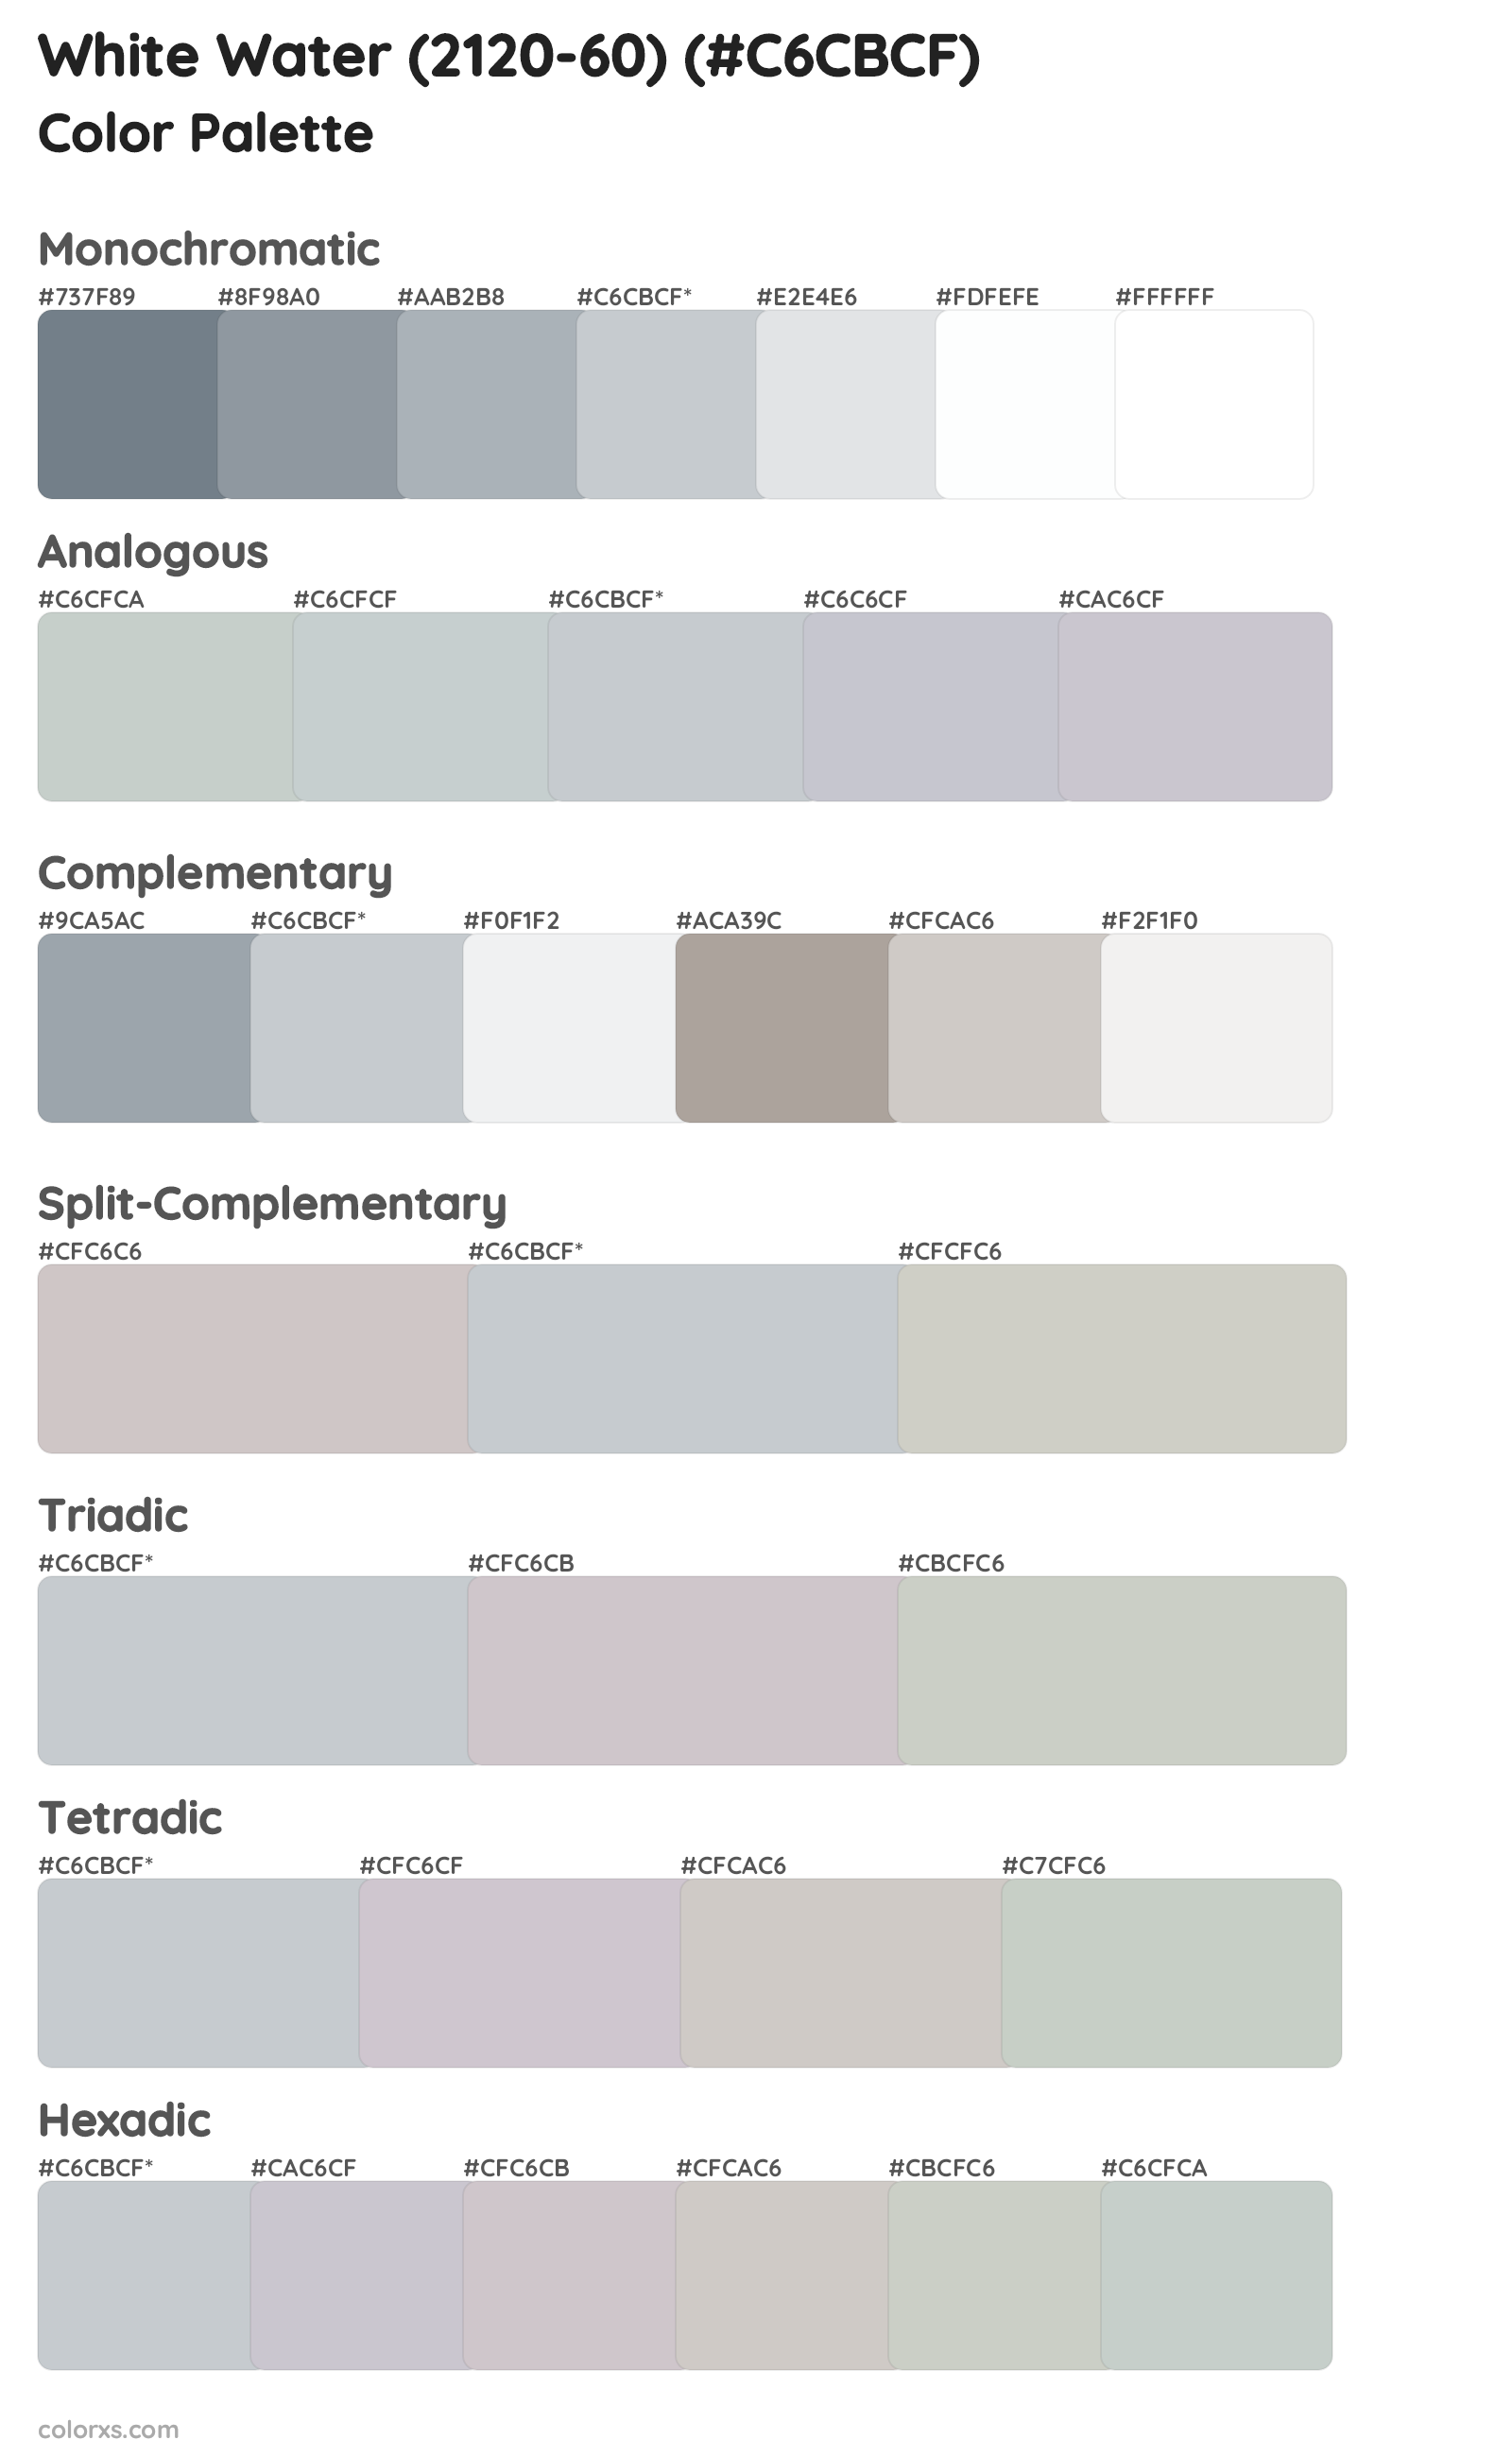 White Water (2120-60) Color Scheme Palettes